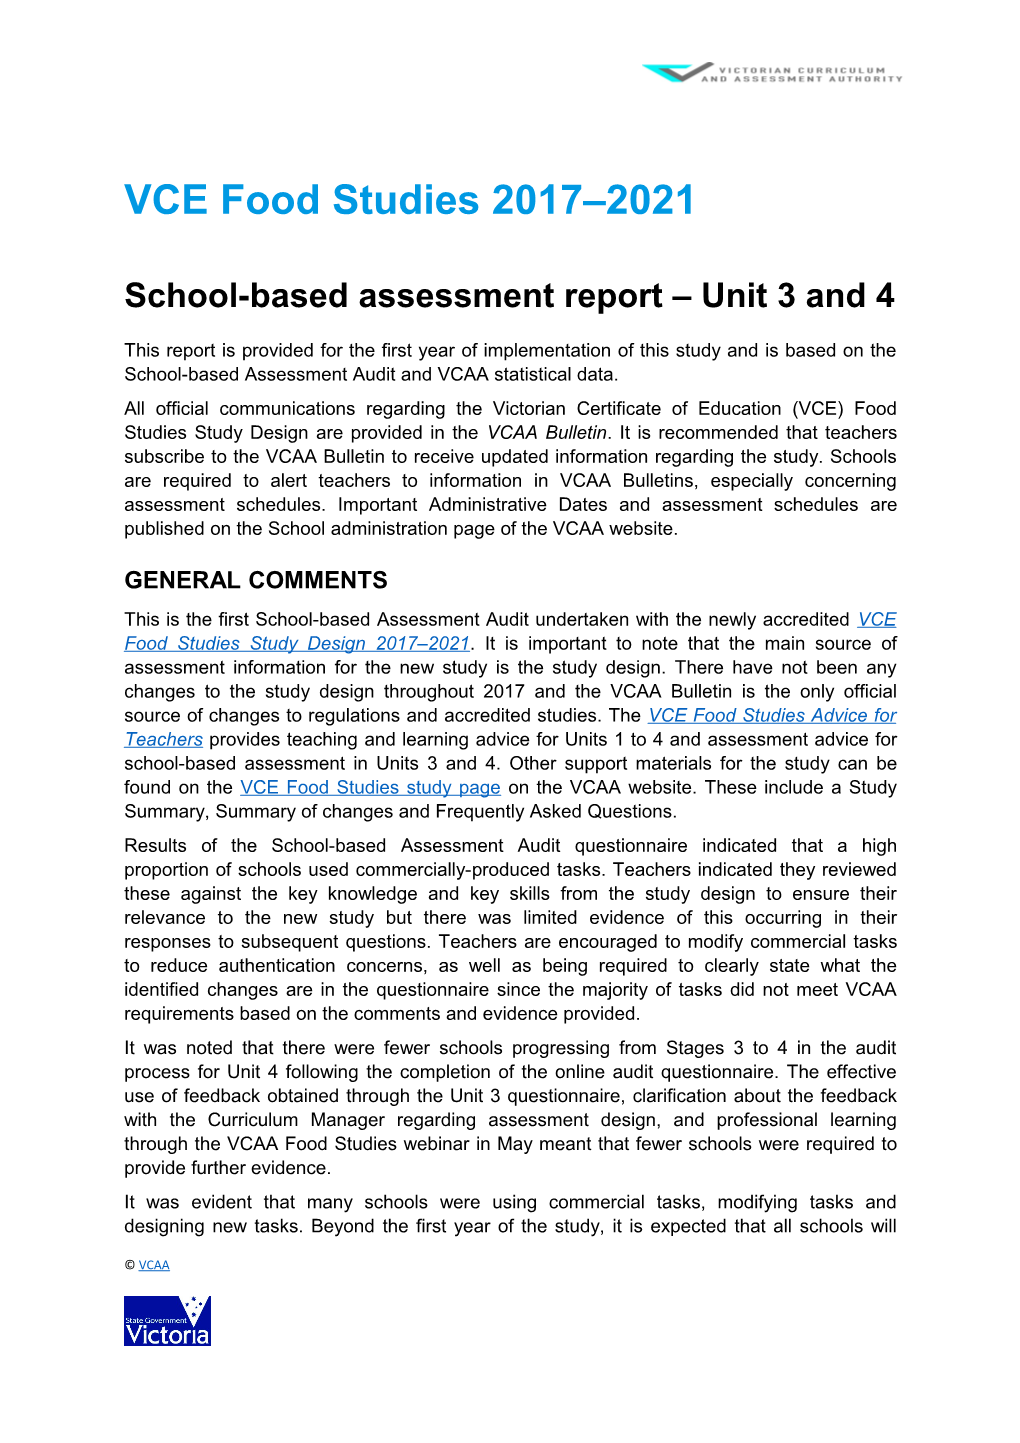 VCE Food Studies School-Based Assessment Report